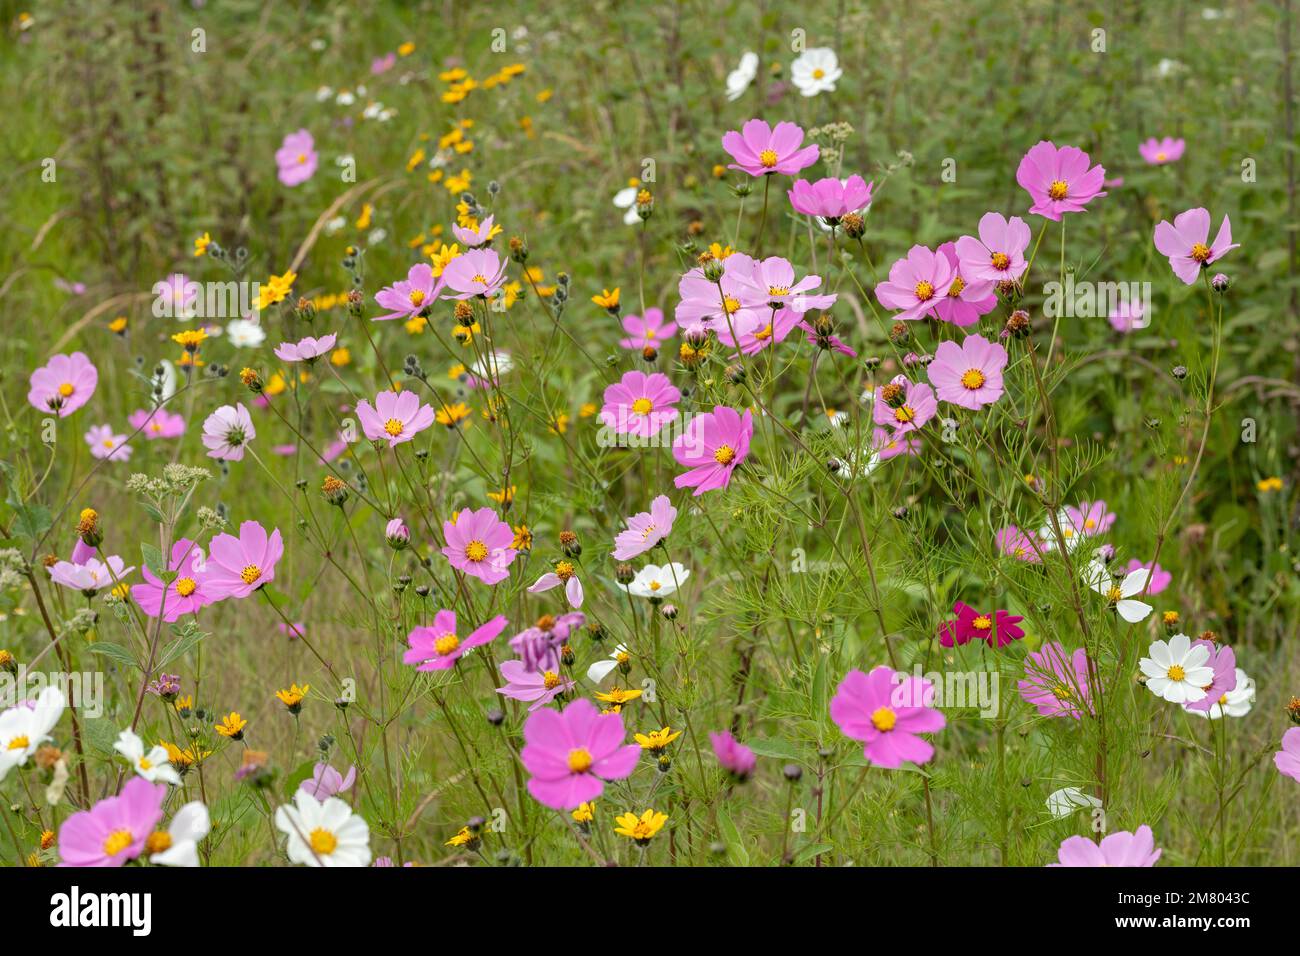 Ein grünes Feld voller mehrfarbiger Mirasol Cosmos bipinnatus-Blumen Stockfoto